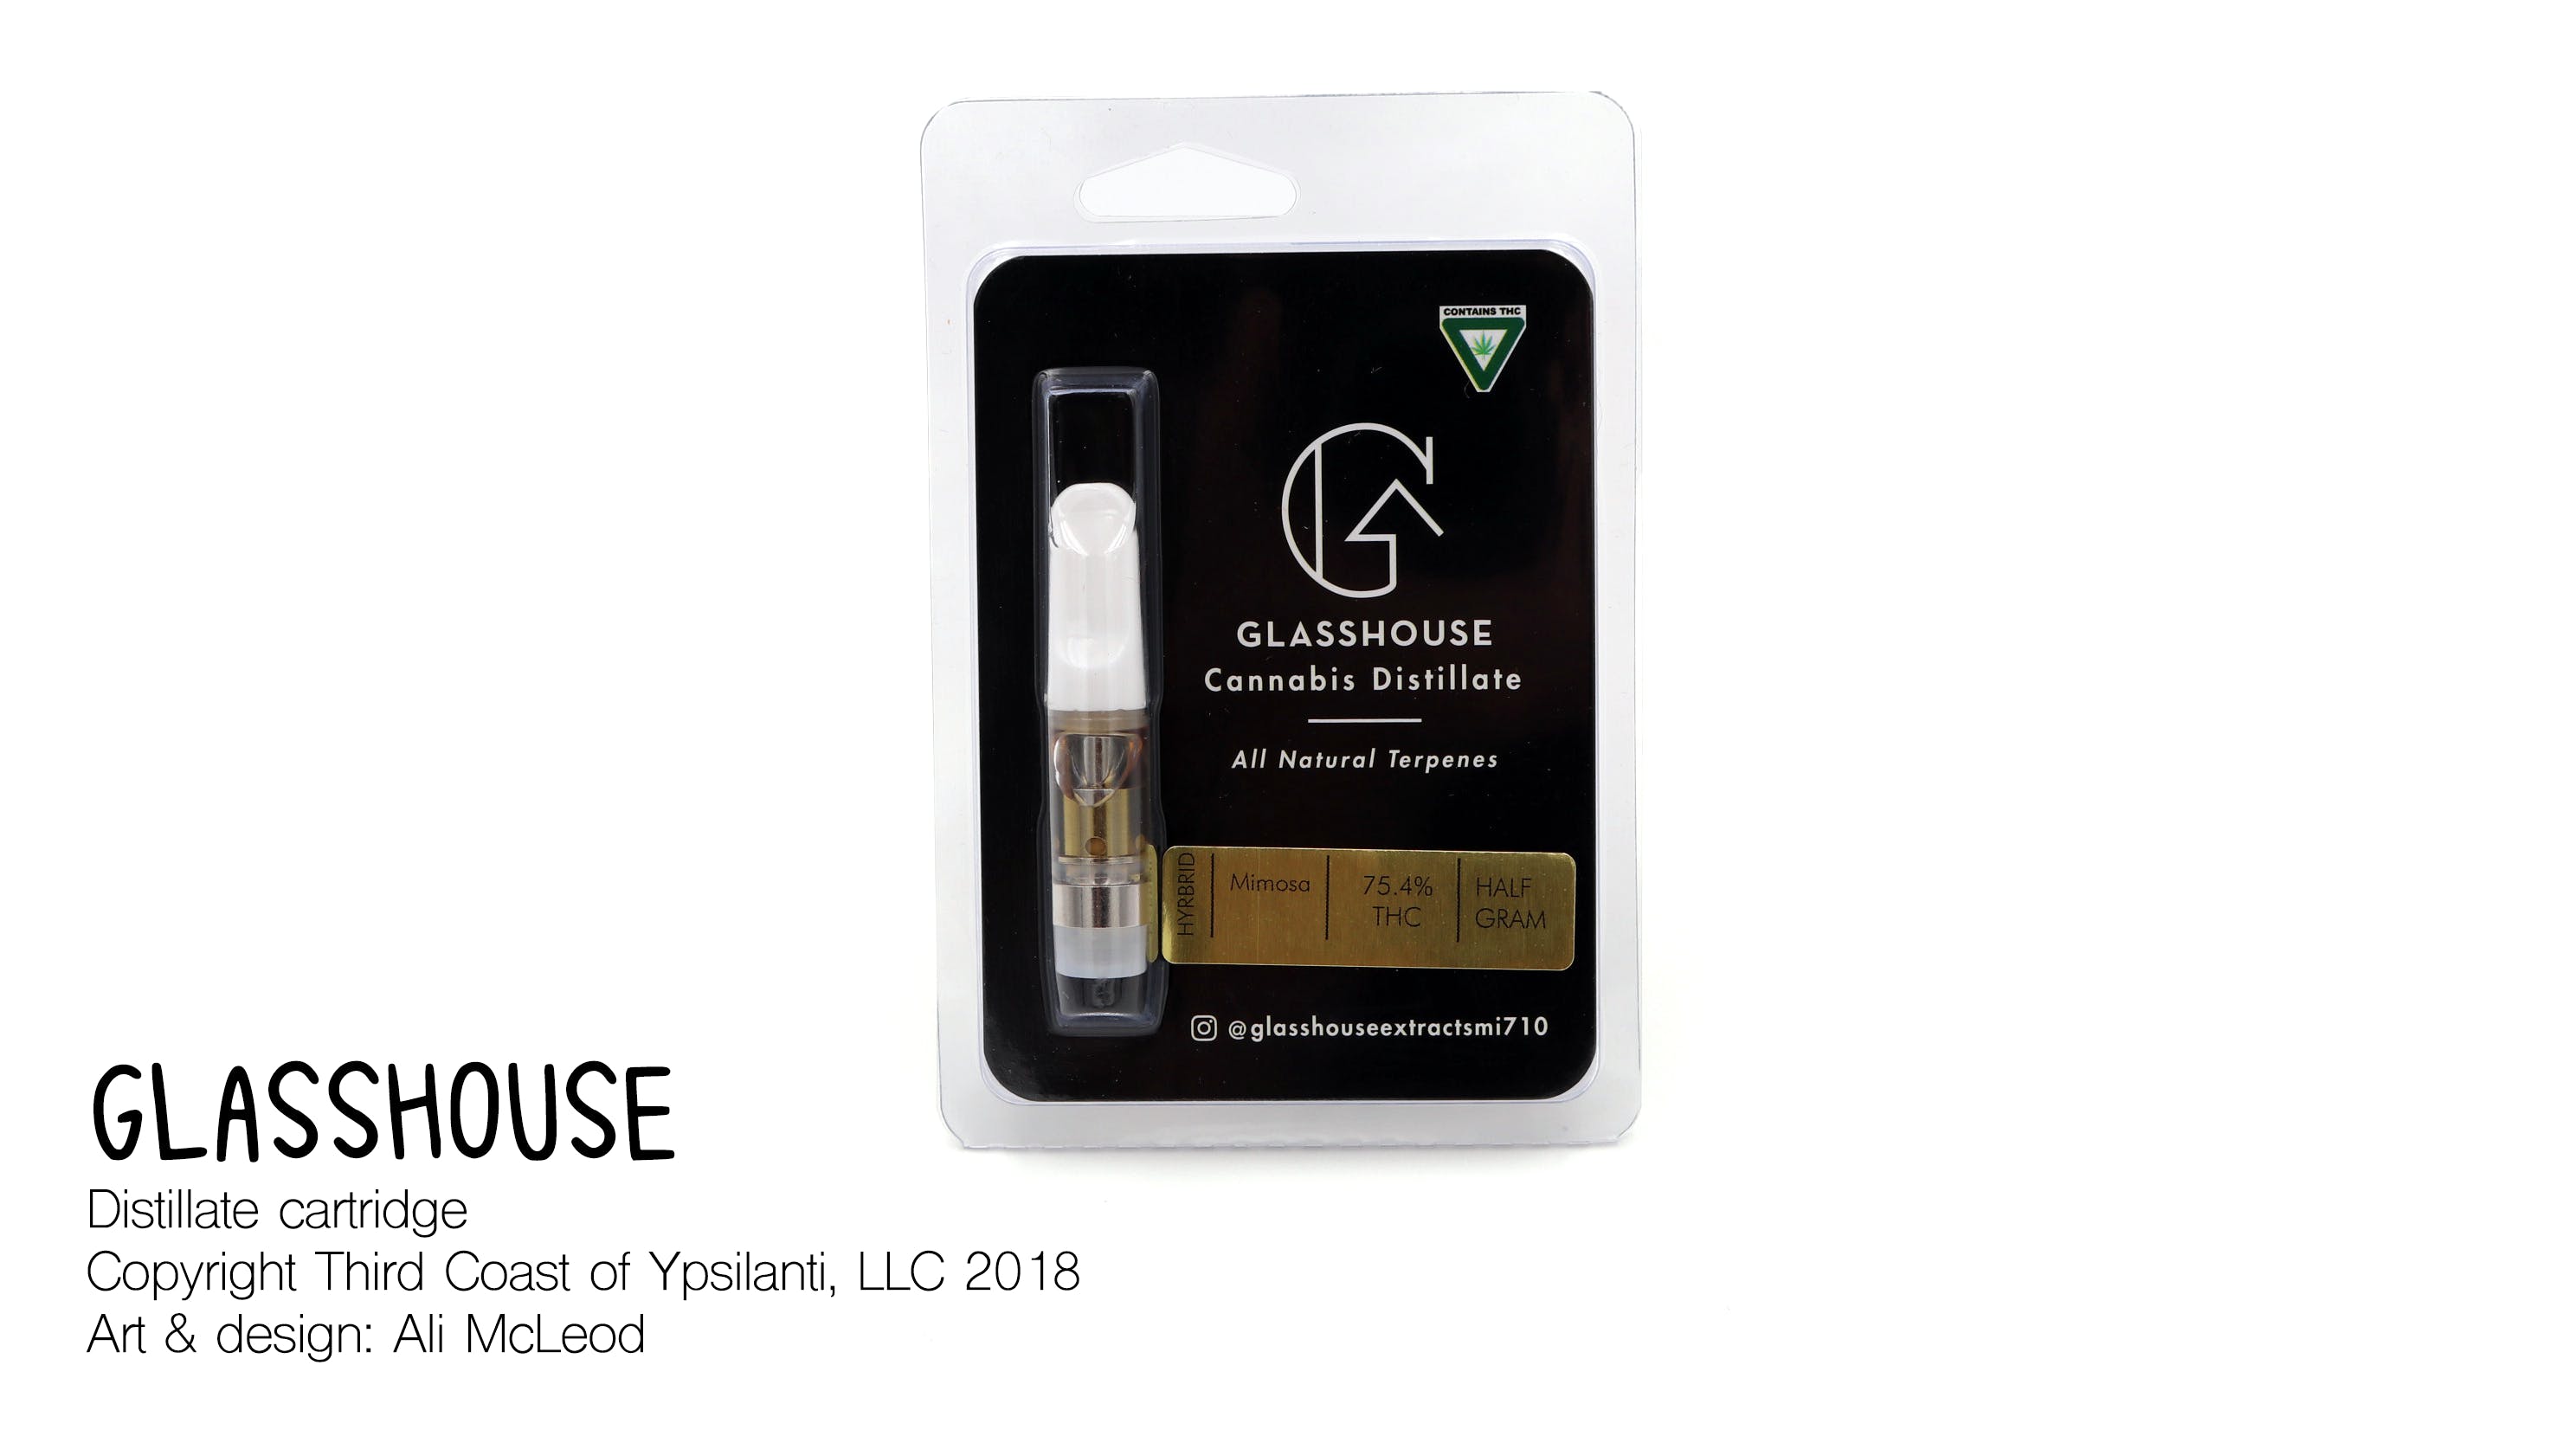 marijuana-dispensaries-19-n-hamilton-ypsilanti-glasshouse-cartridge-cannabis-distillate-2440half-gram